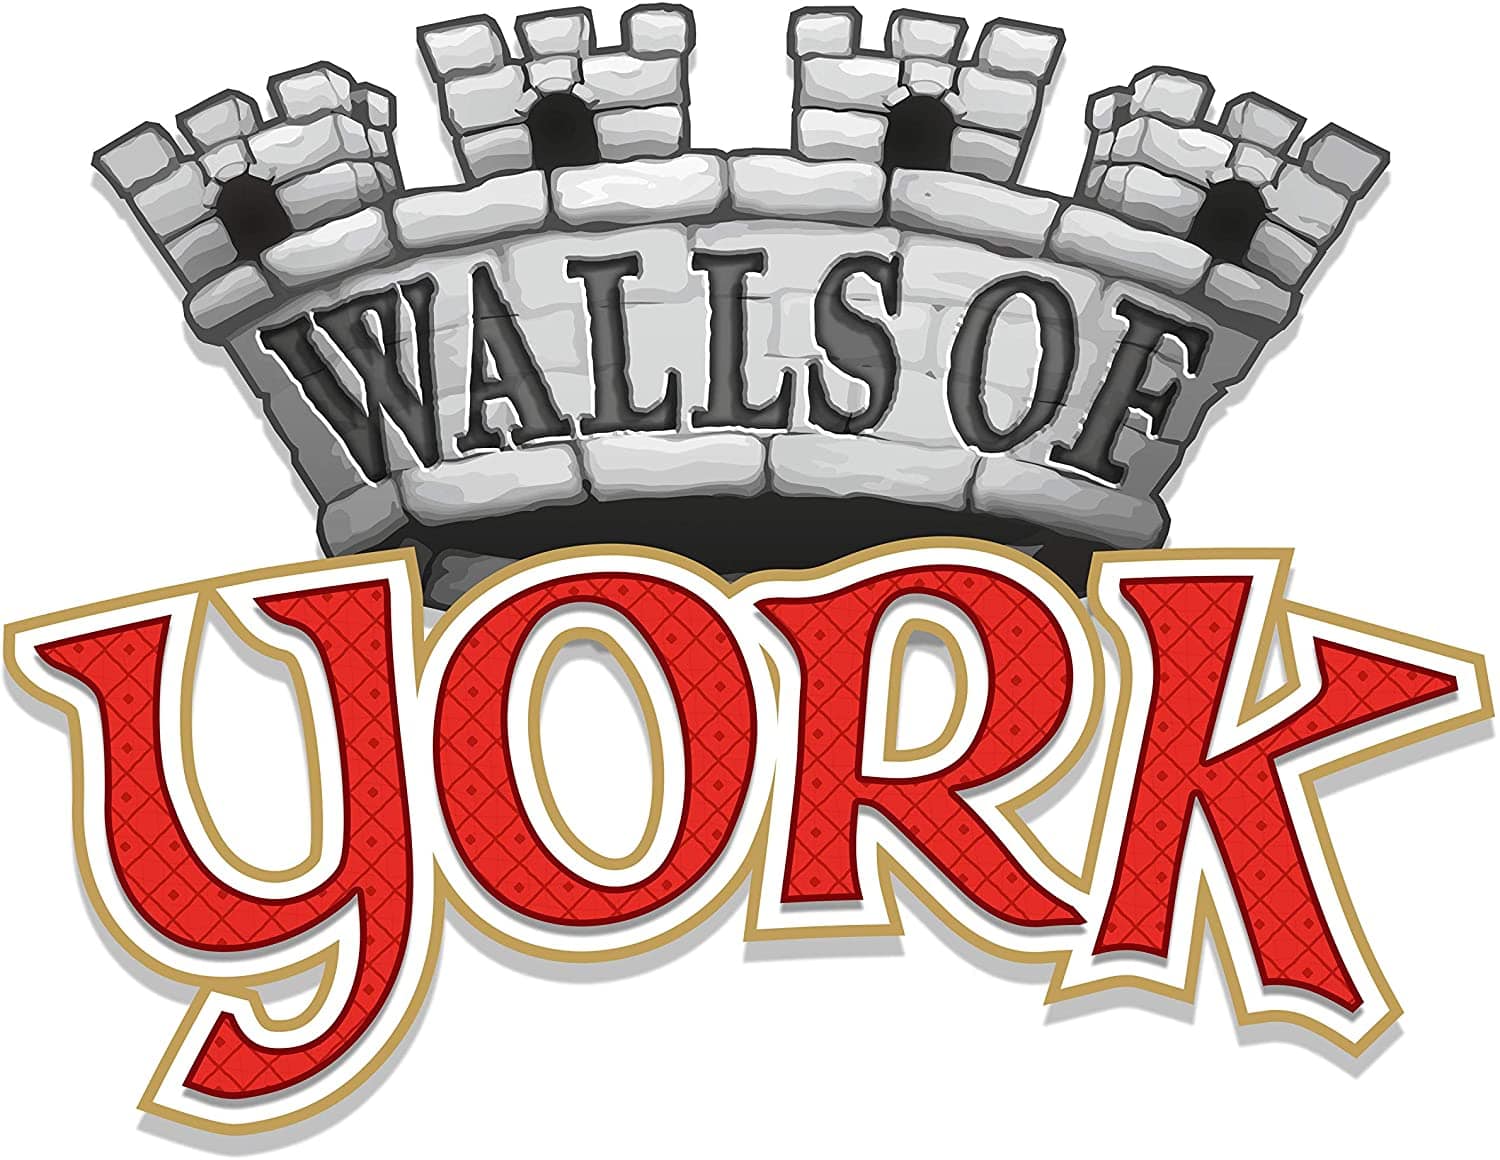 Walls of York CMON